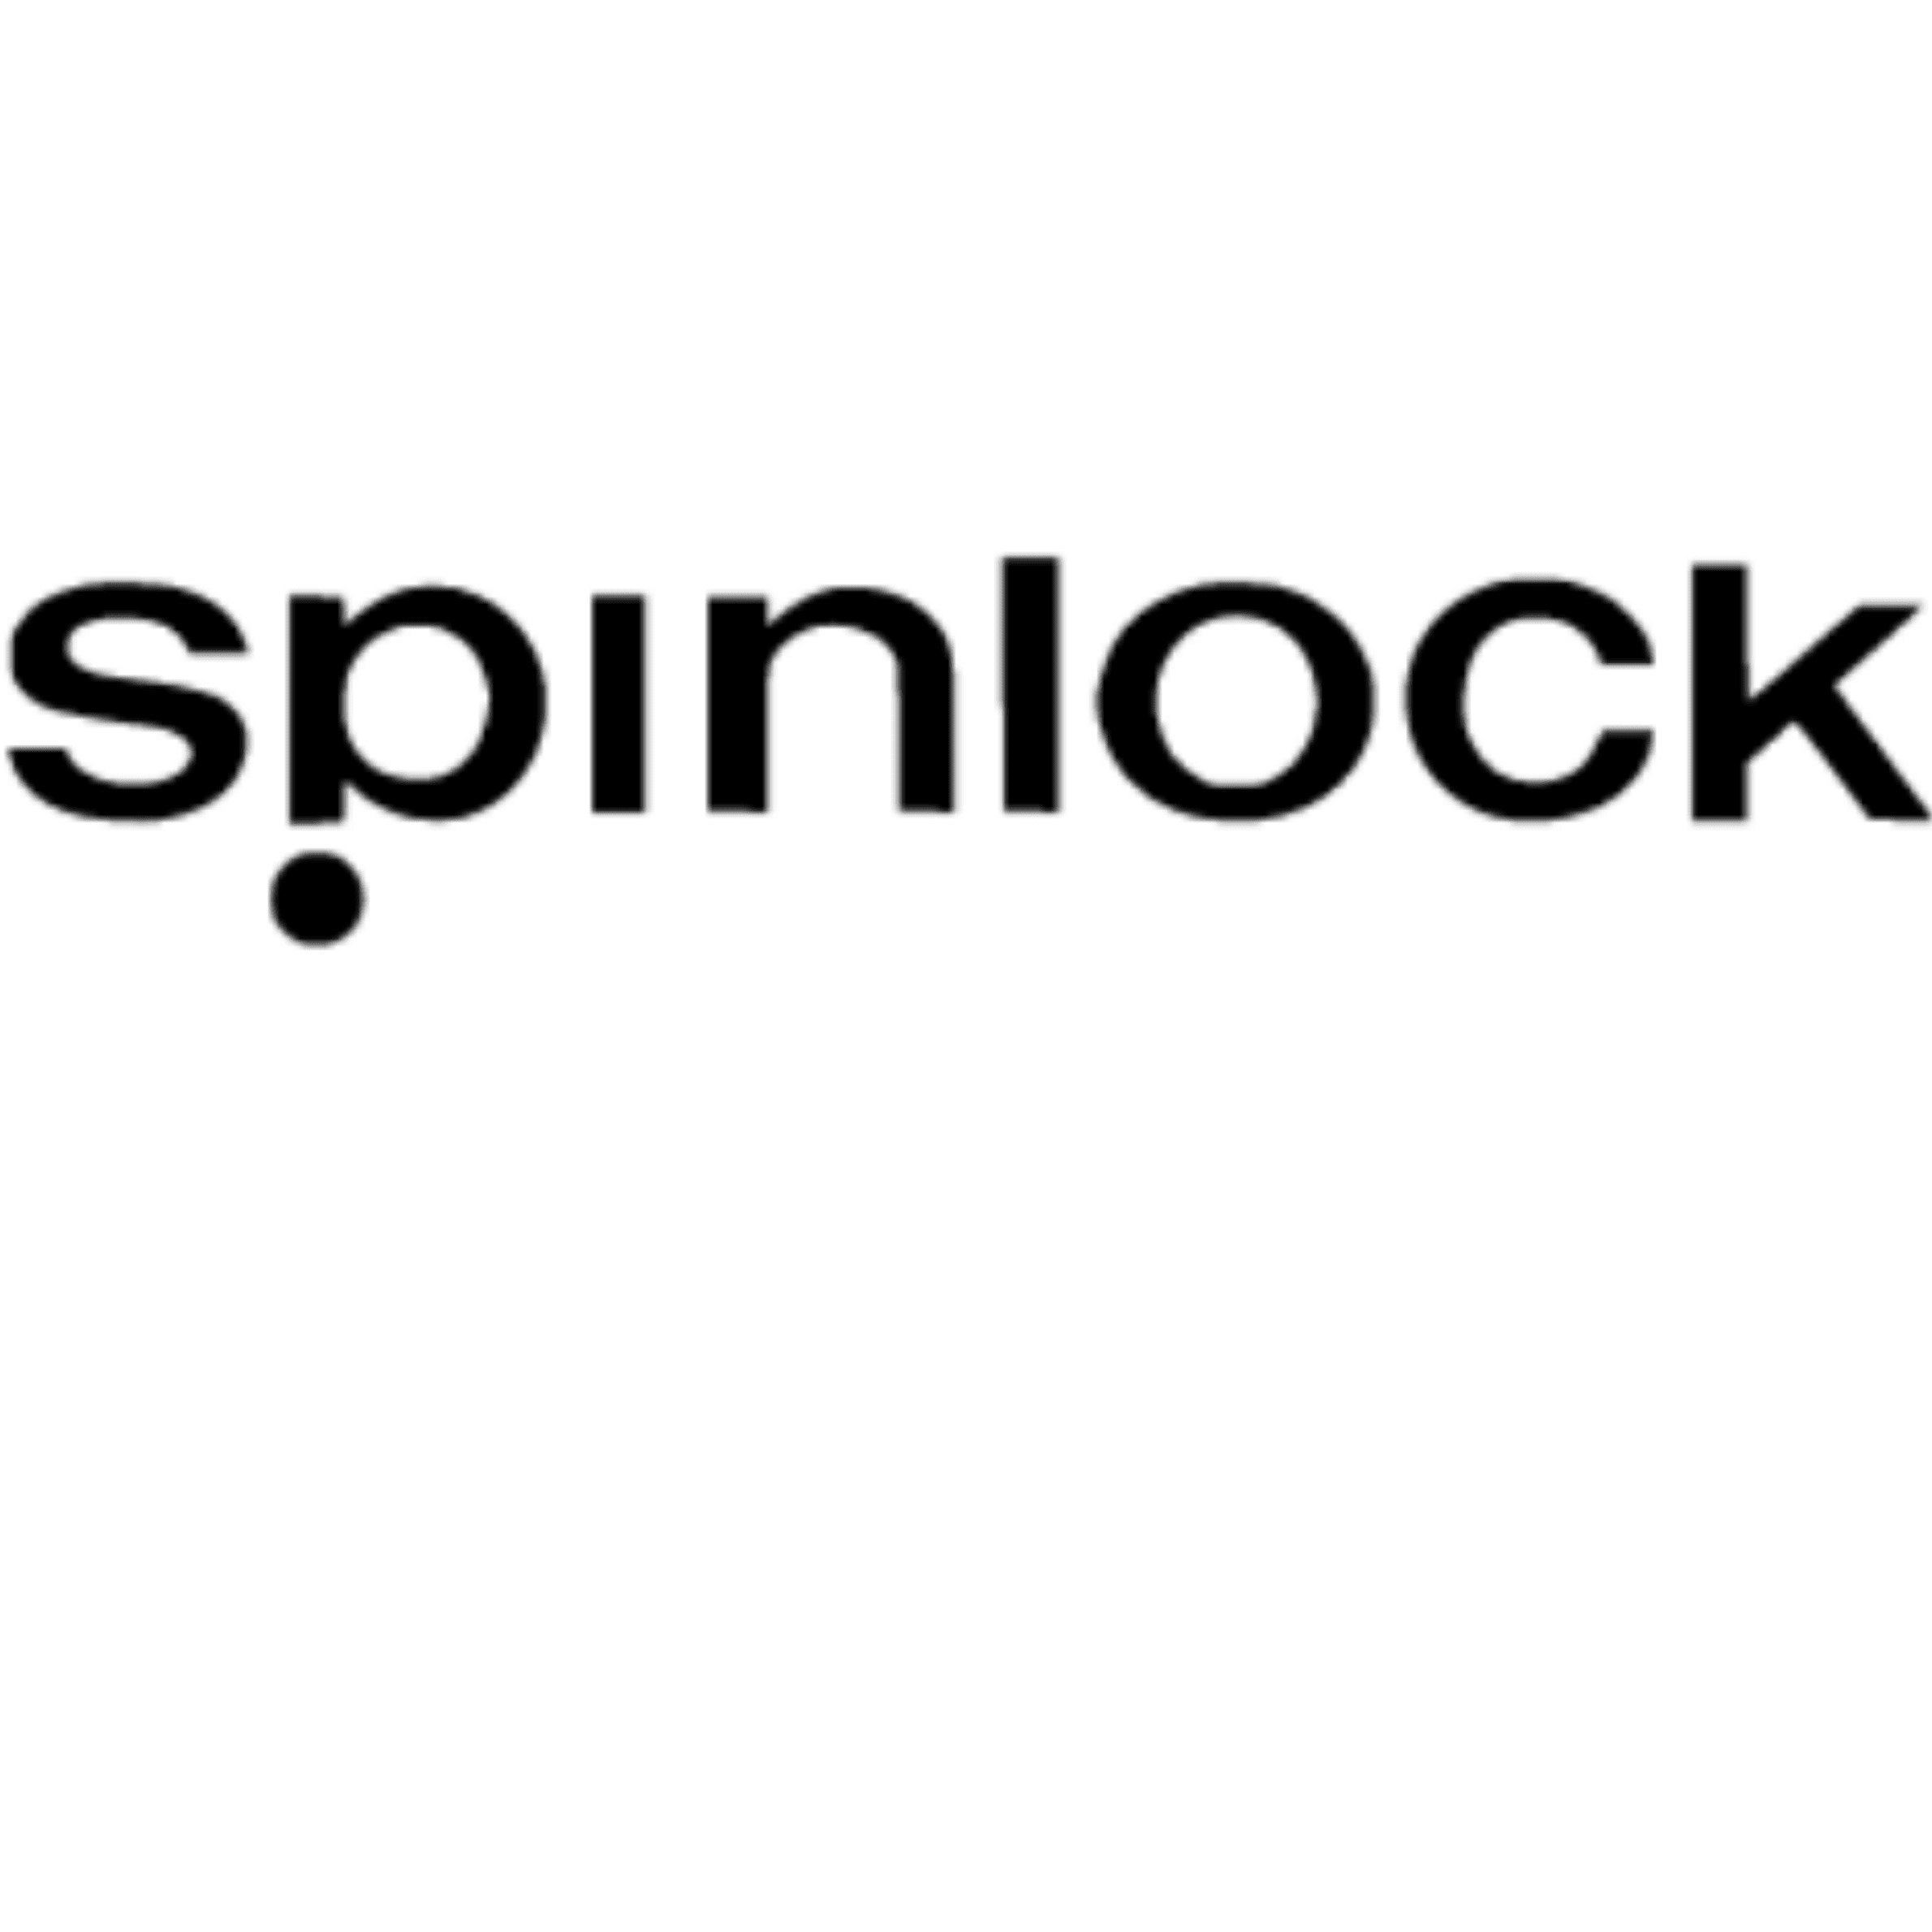 Spinklock logo